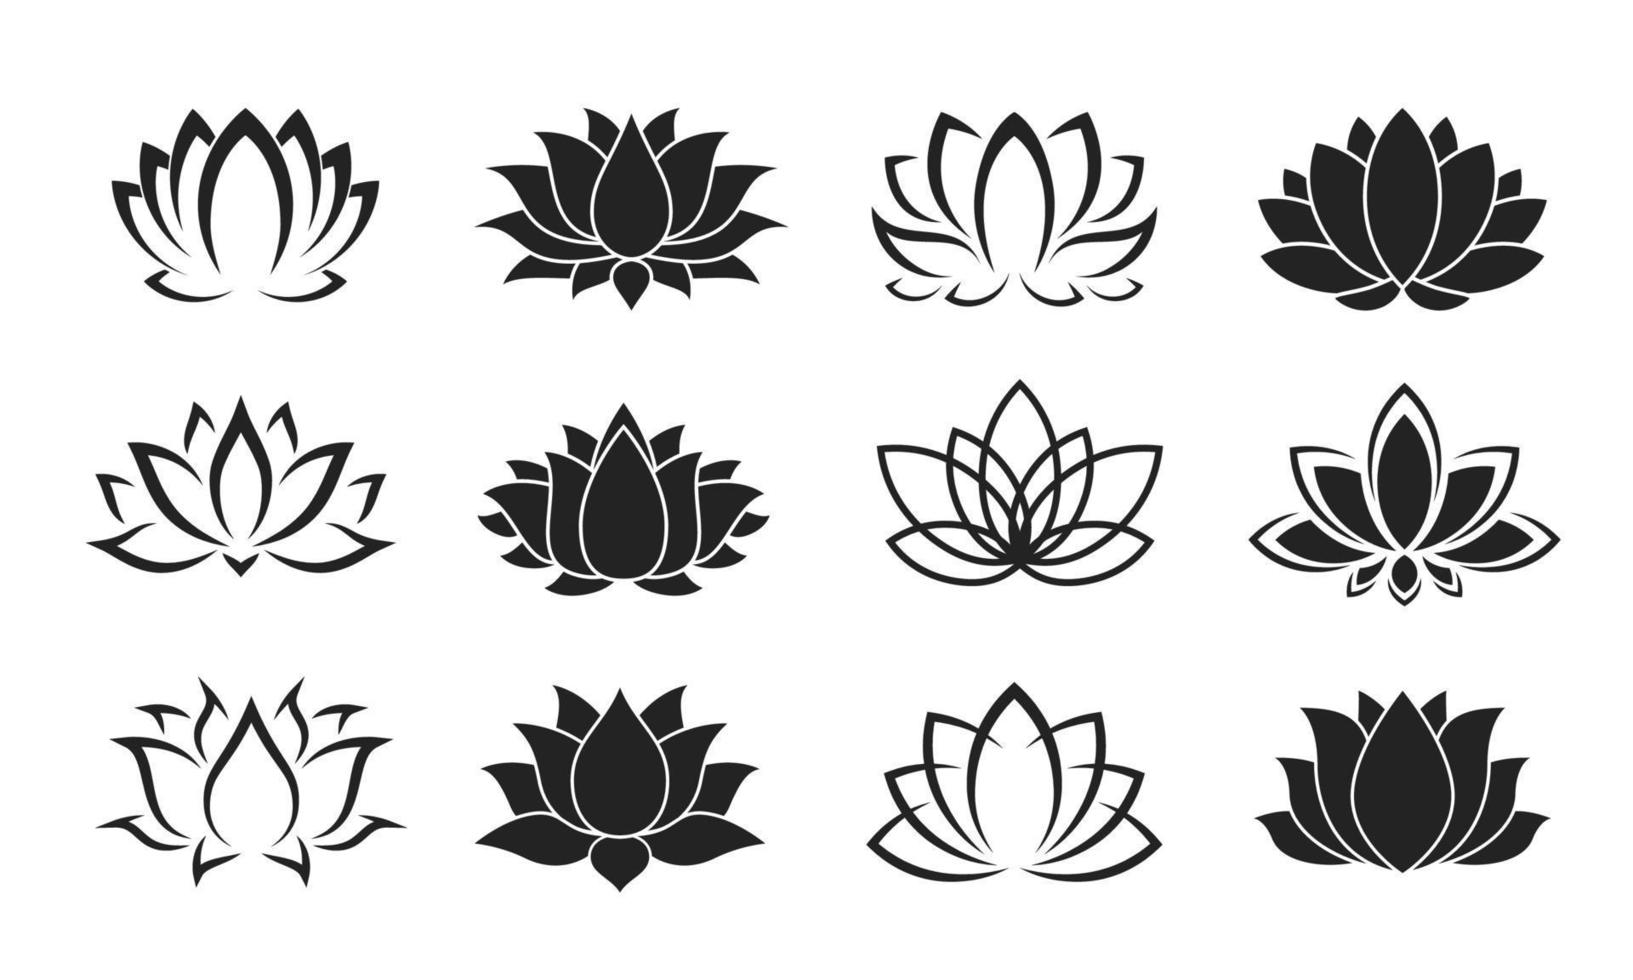 Lotus flower icons, Buddhism and yoga symbols vector